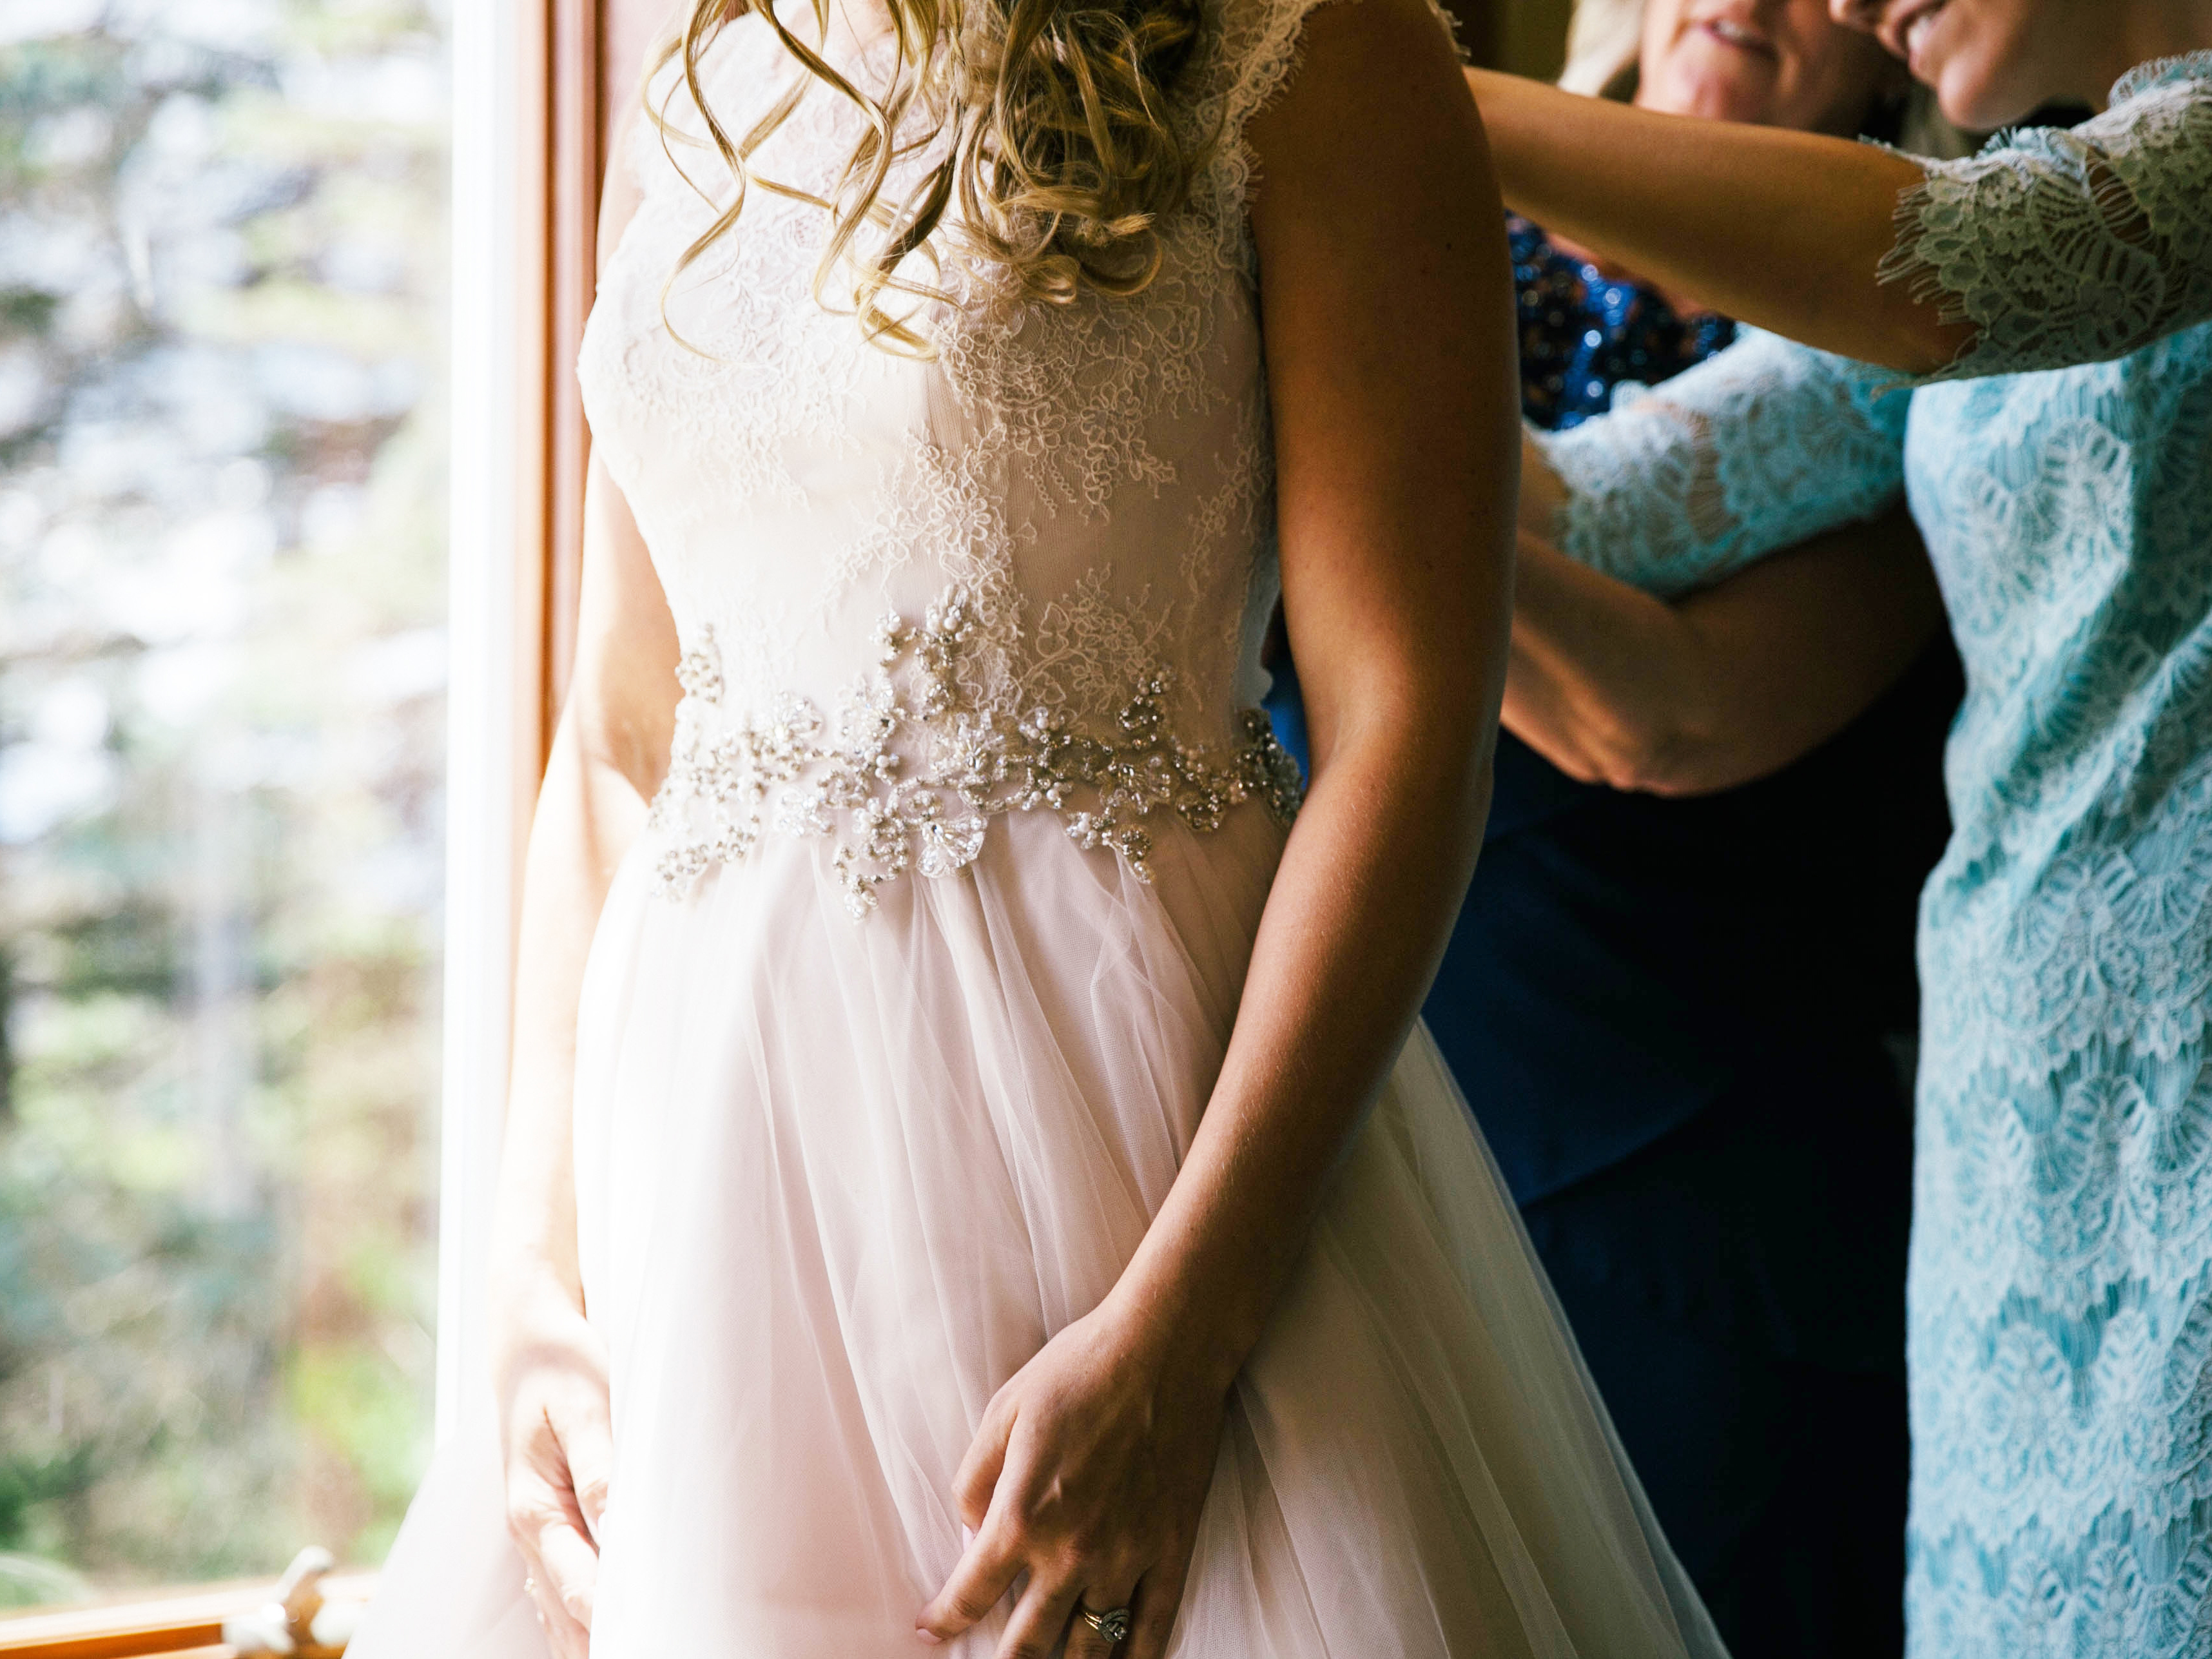 Wedding dress alteration tips